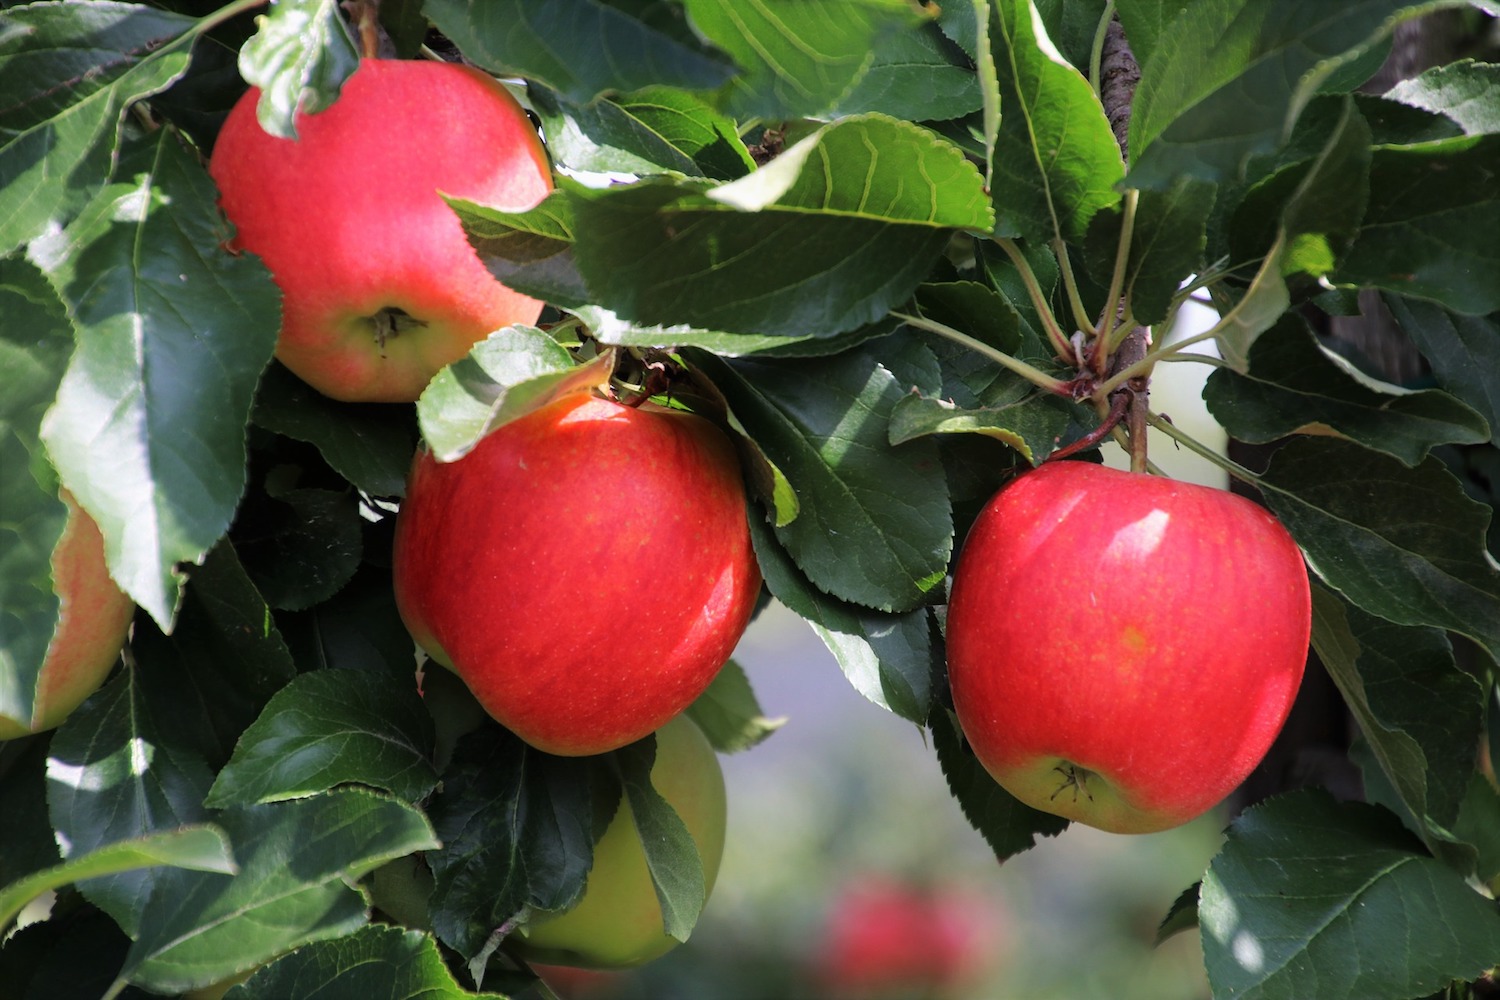 Red ripe apples on tree